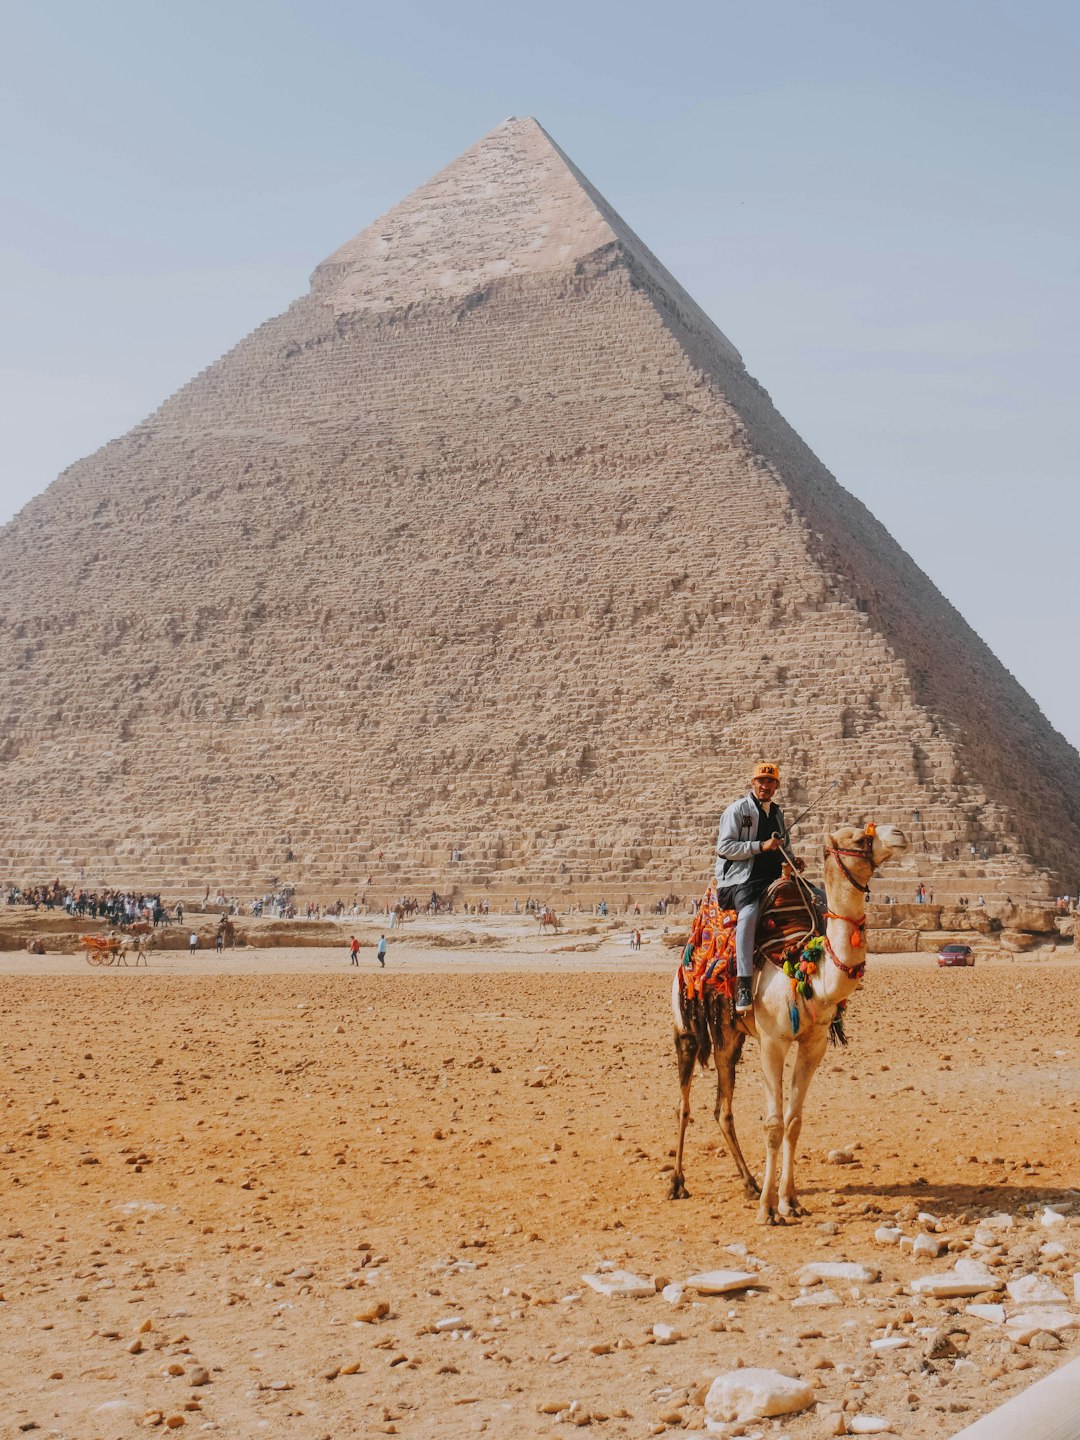 pyramid of Egypt